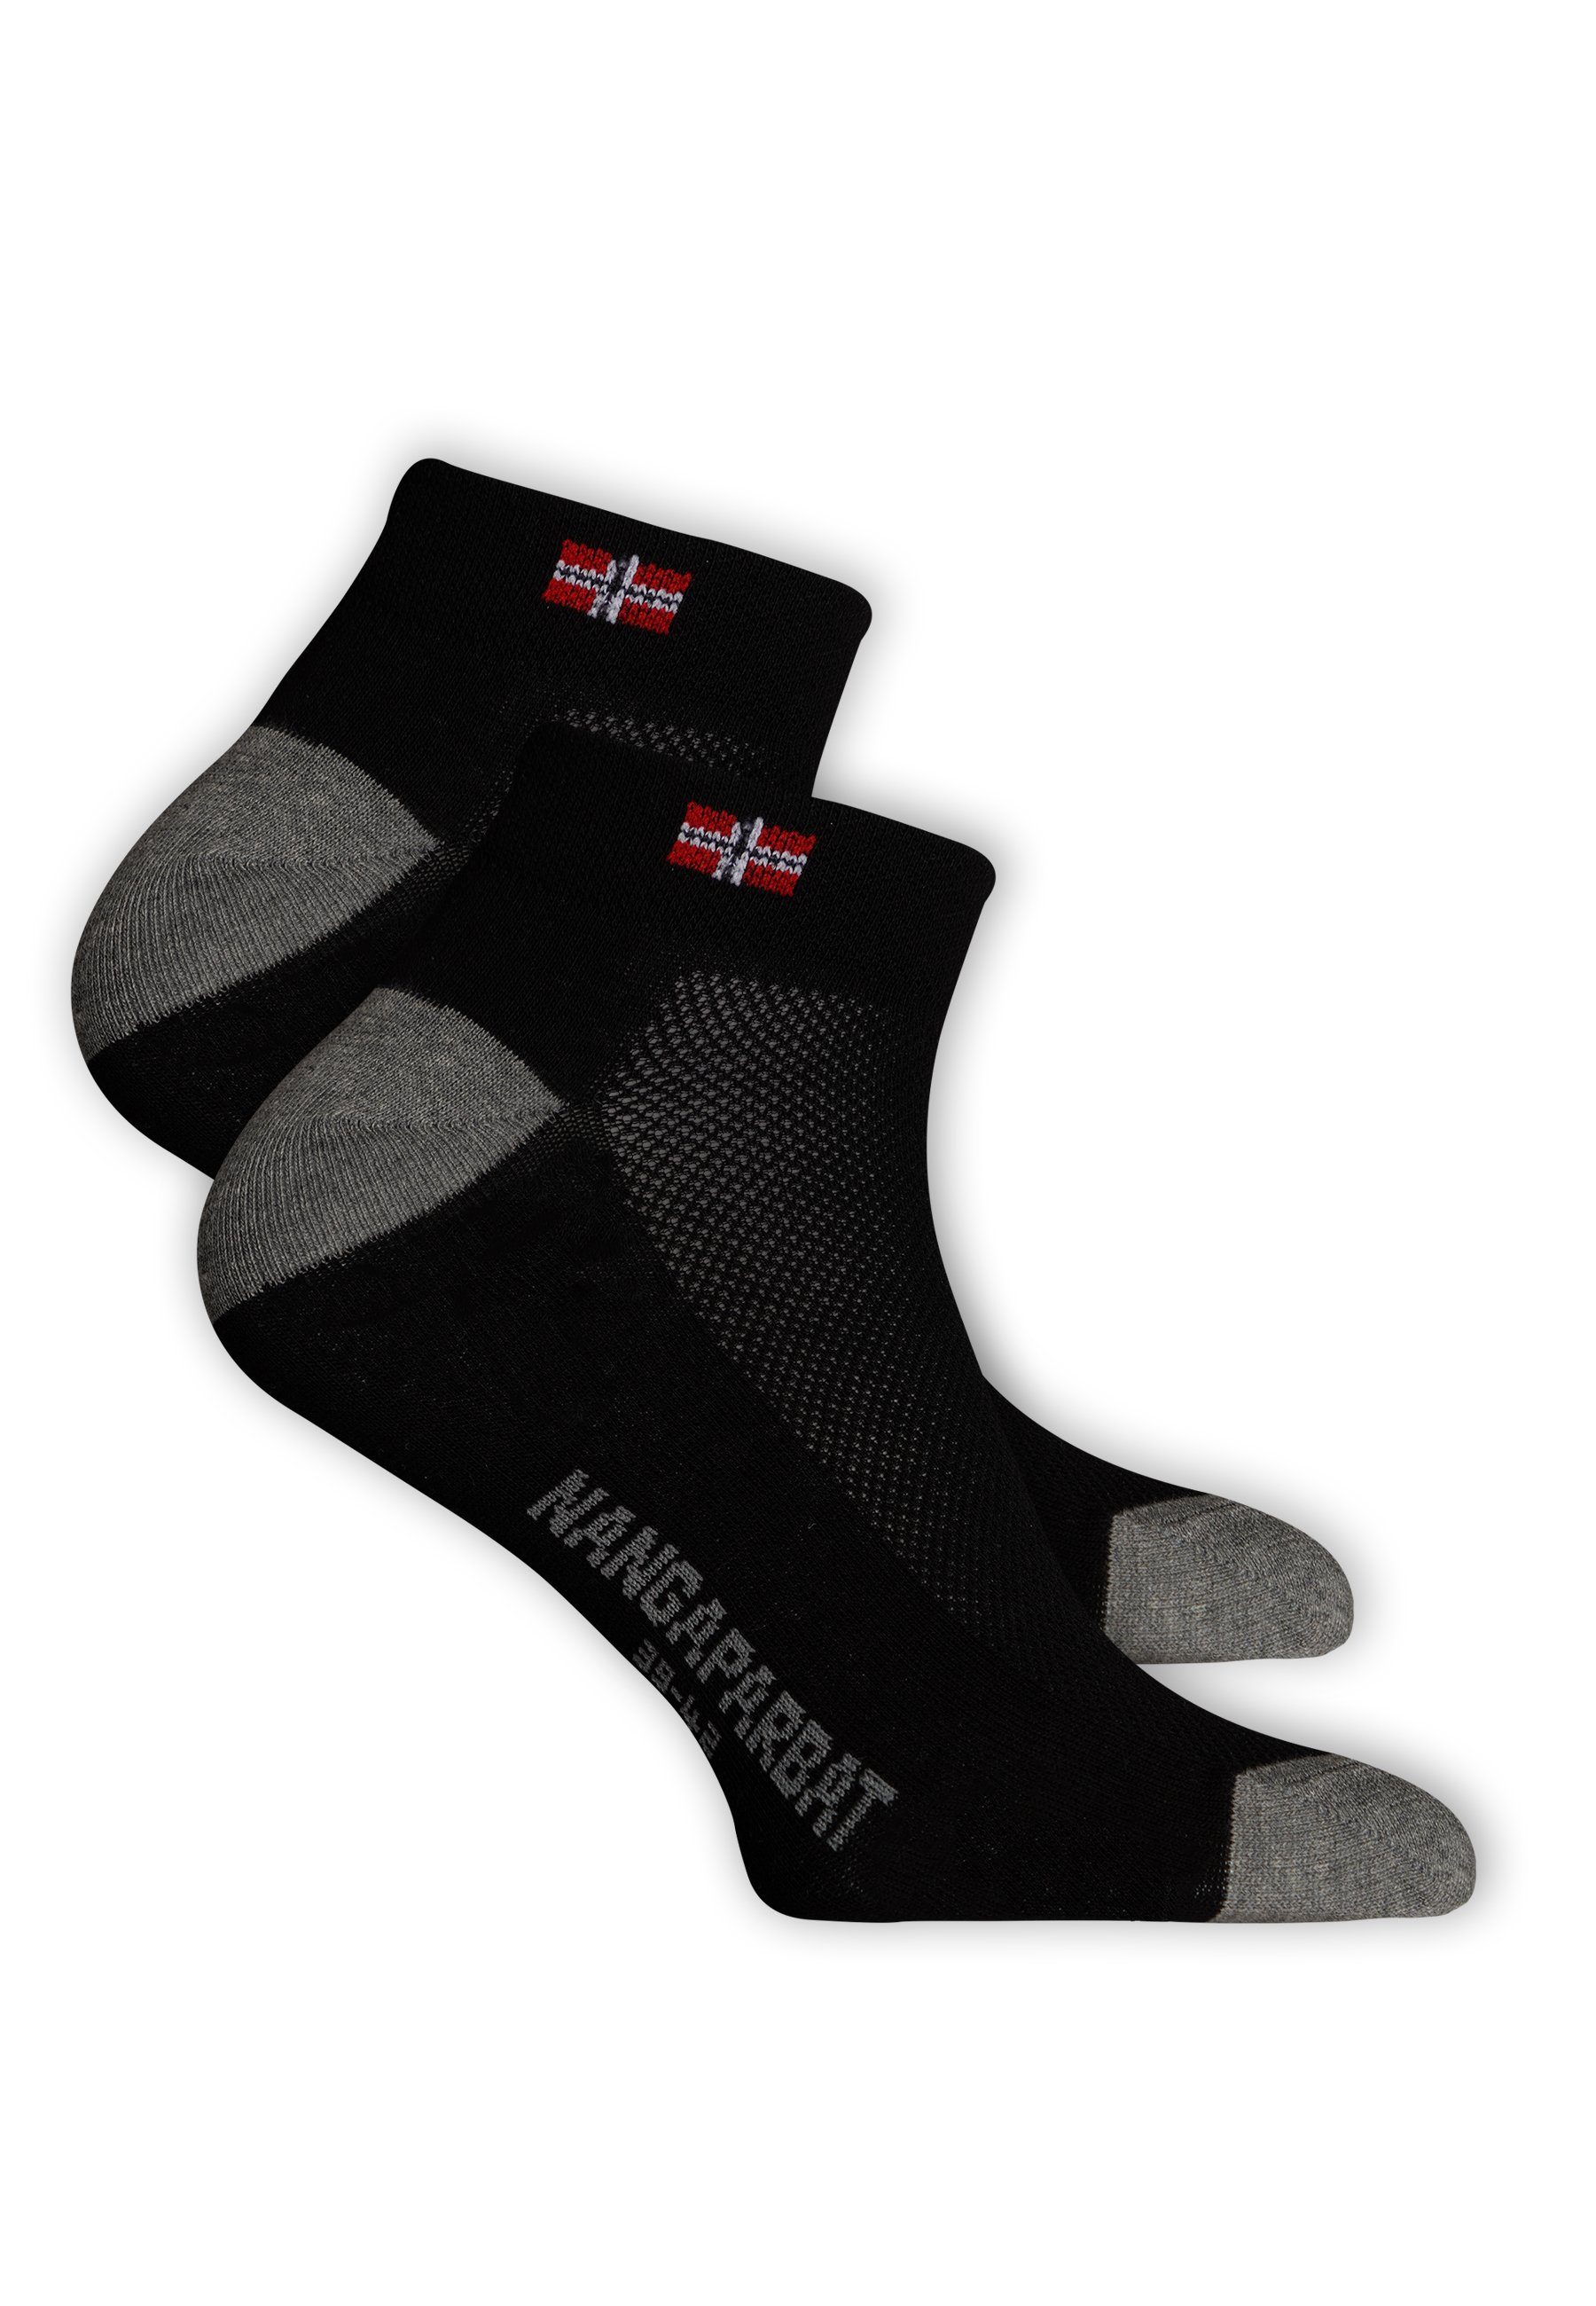 NANGAPARBAT Socken Trittdämpfung komfortabler schwarz mit